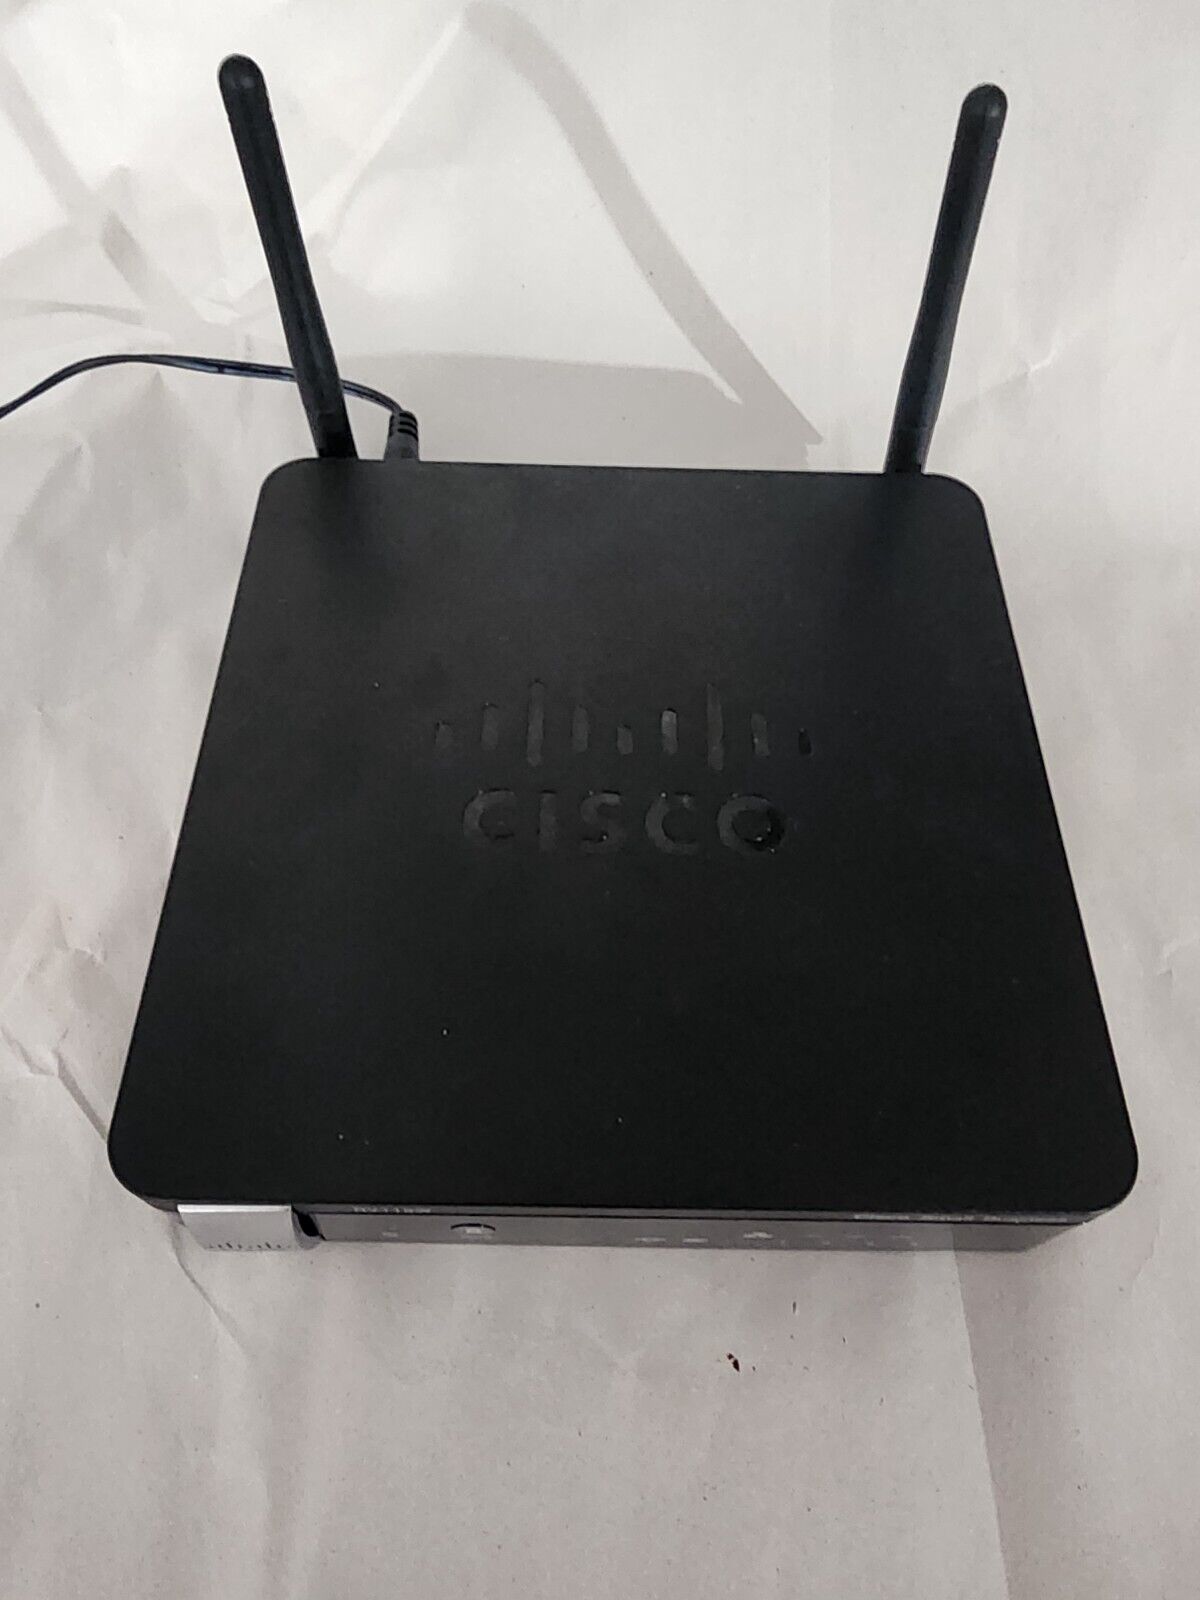 Cisco RV110W Small Office Wireless-N VPN Firewall Router w/ Adapter